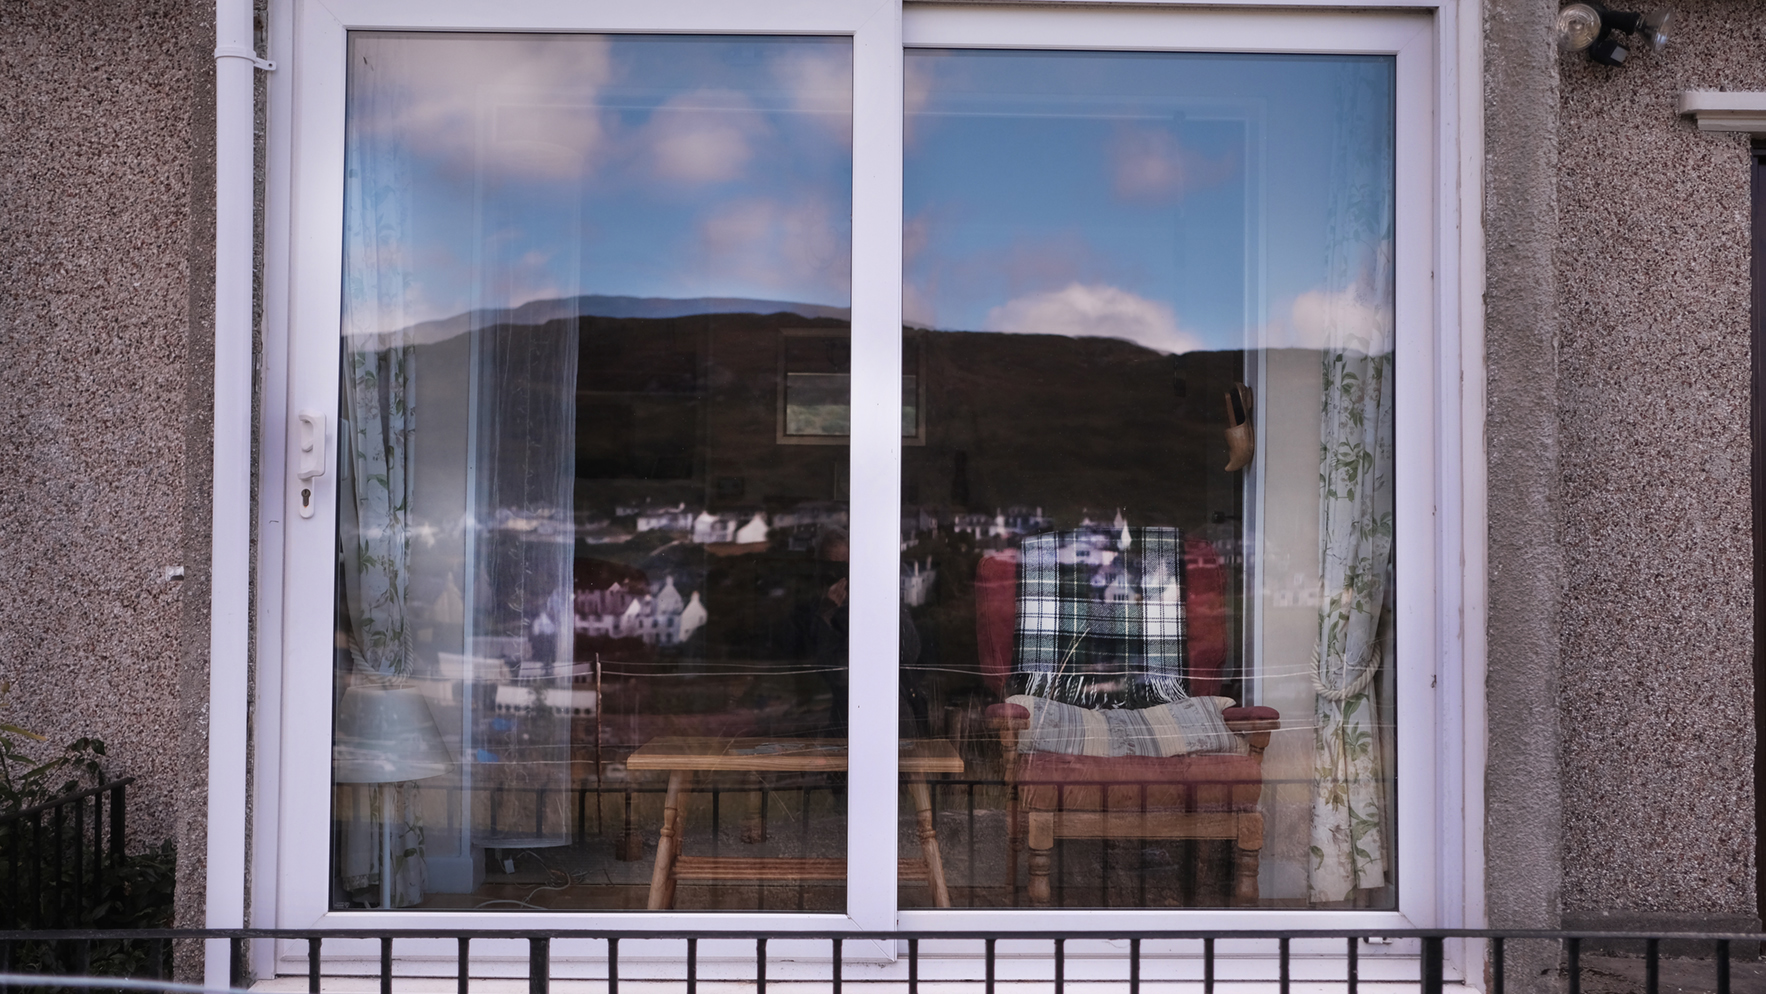  House window. Tarbert, Argyll and Bute, Scotland. 